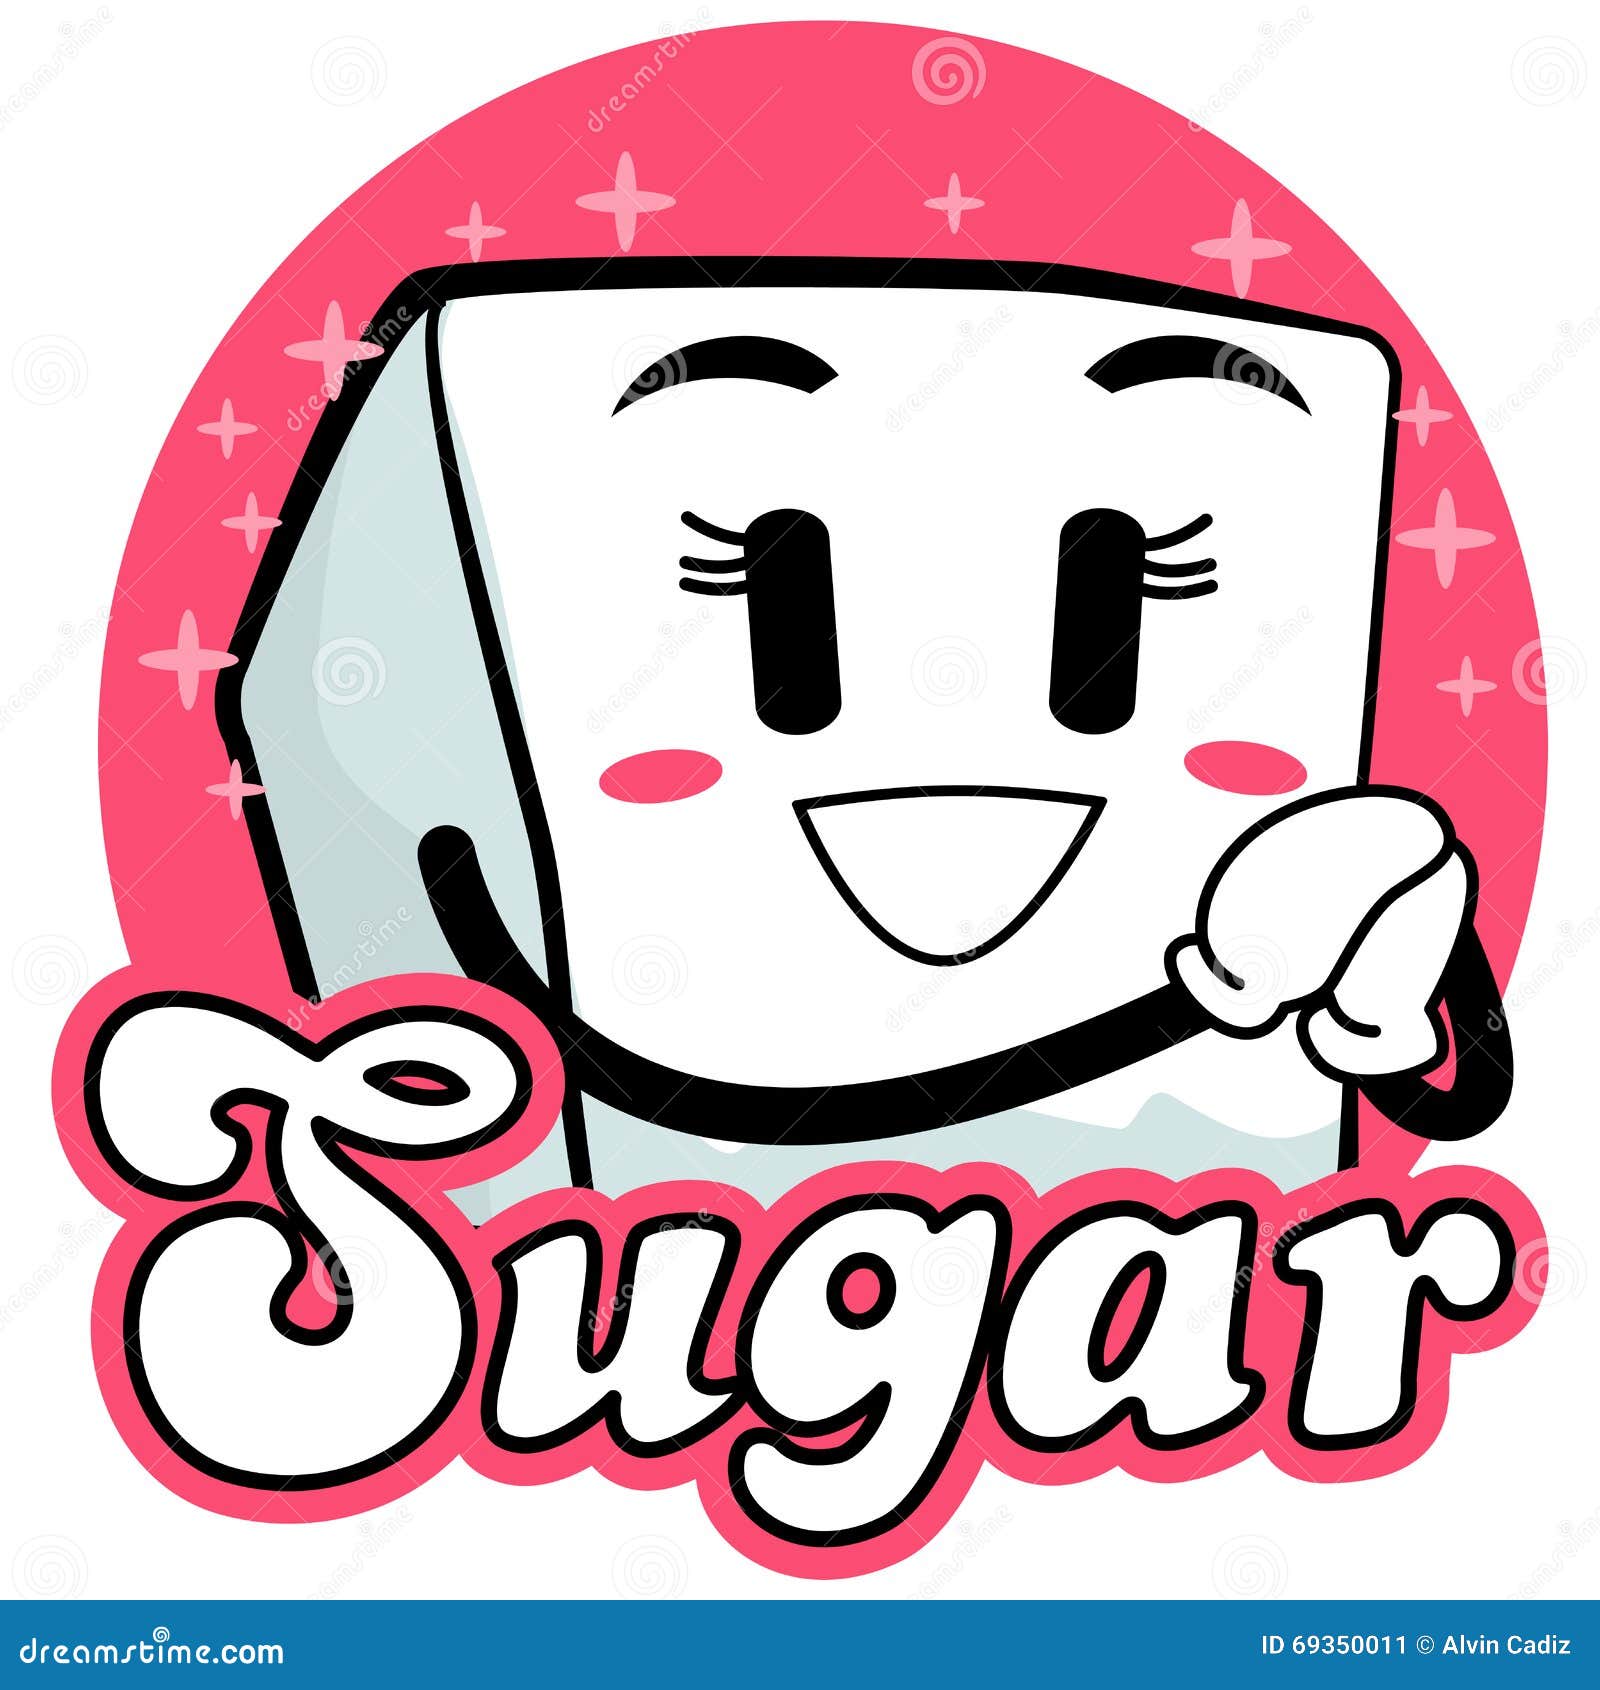 Cube Sugar Mascot stock vector. Illustration of candy - 69350011